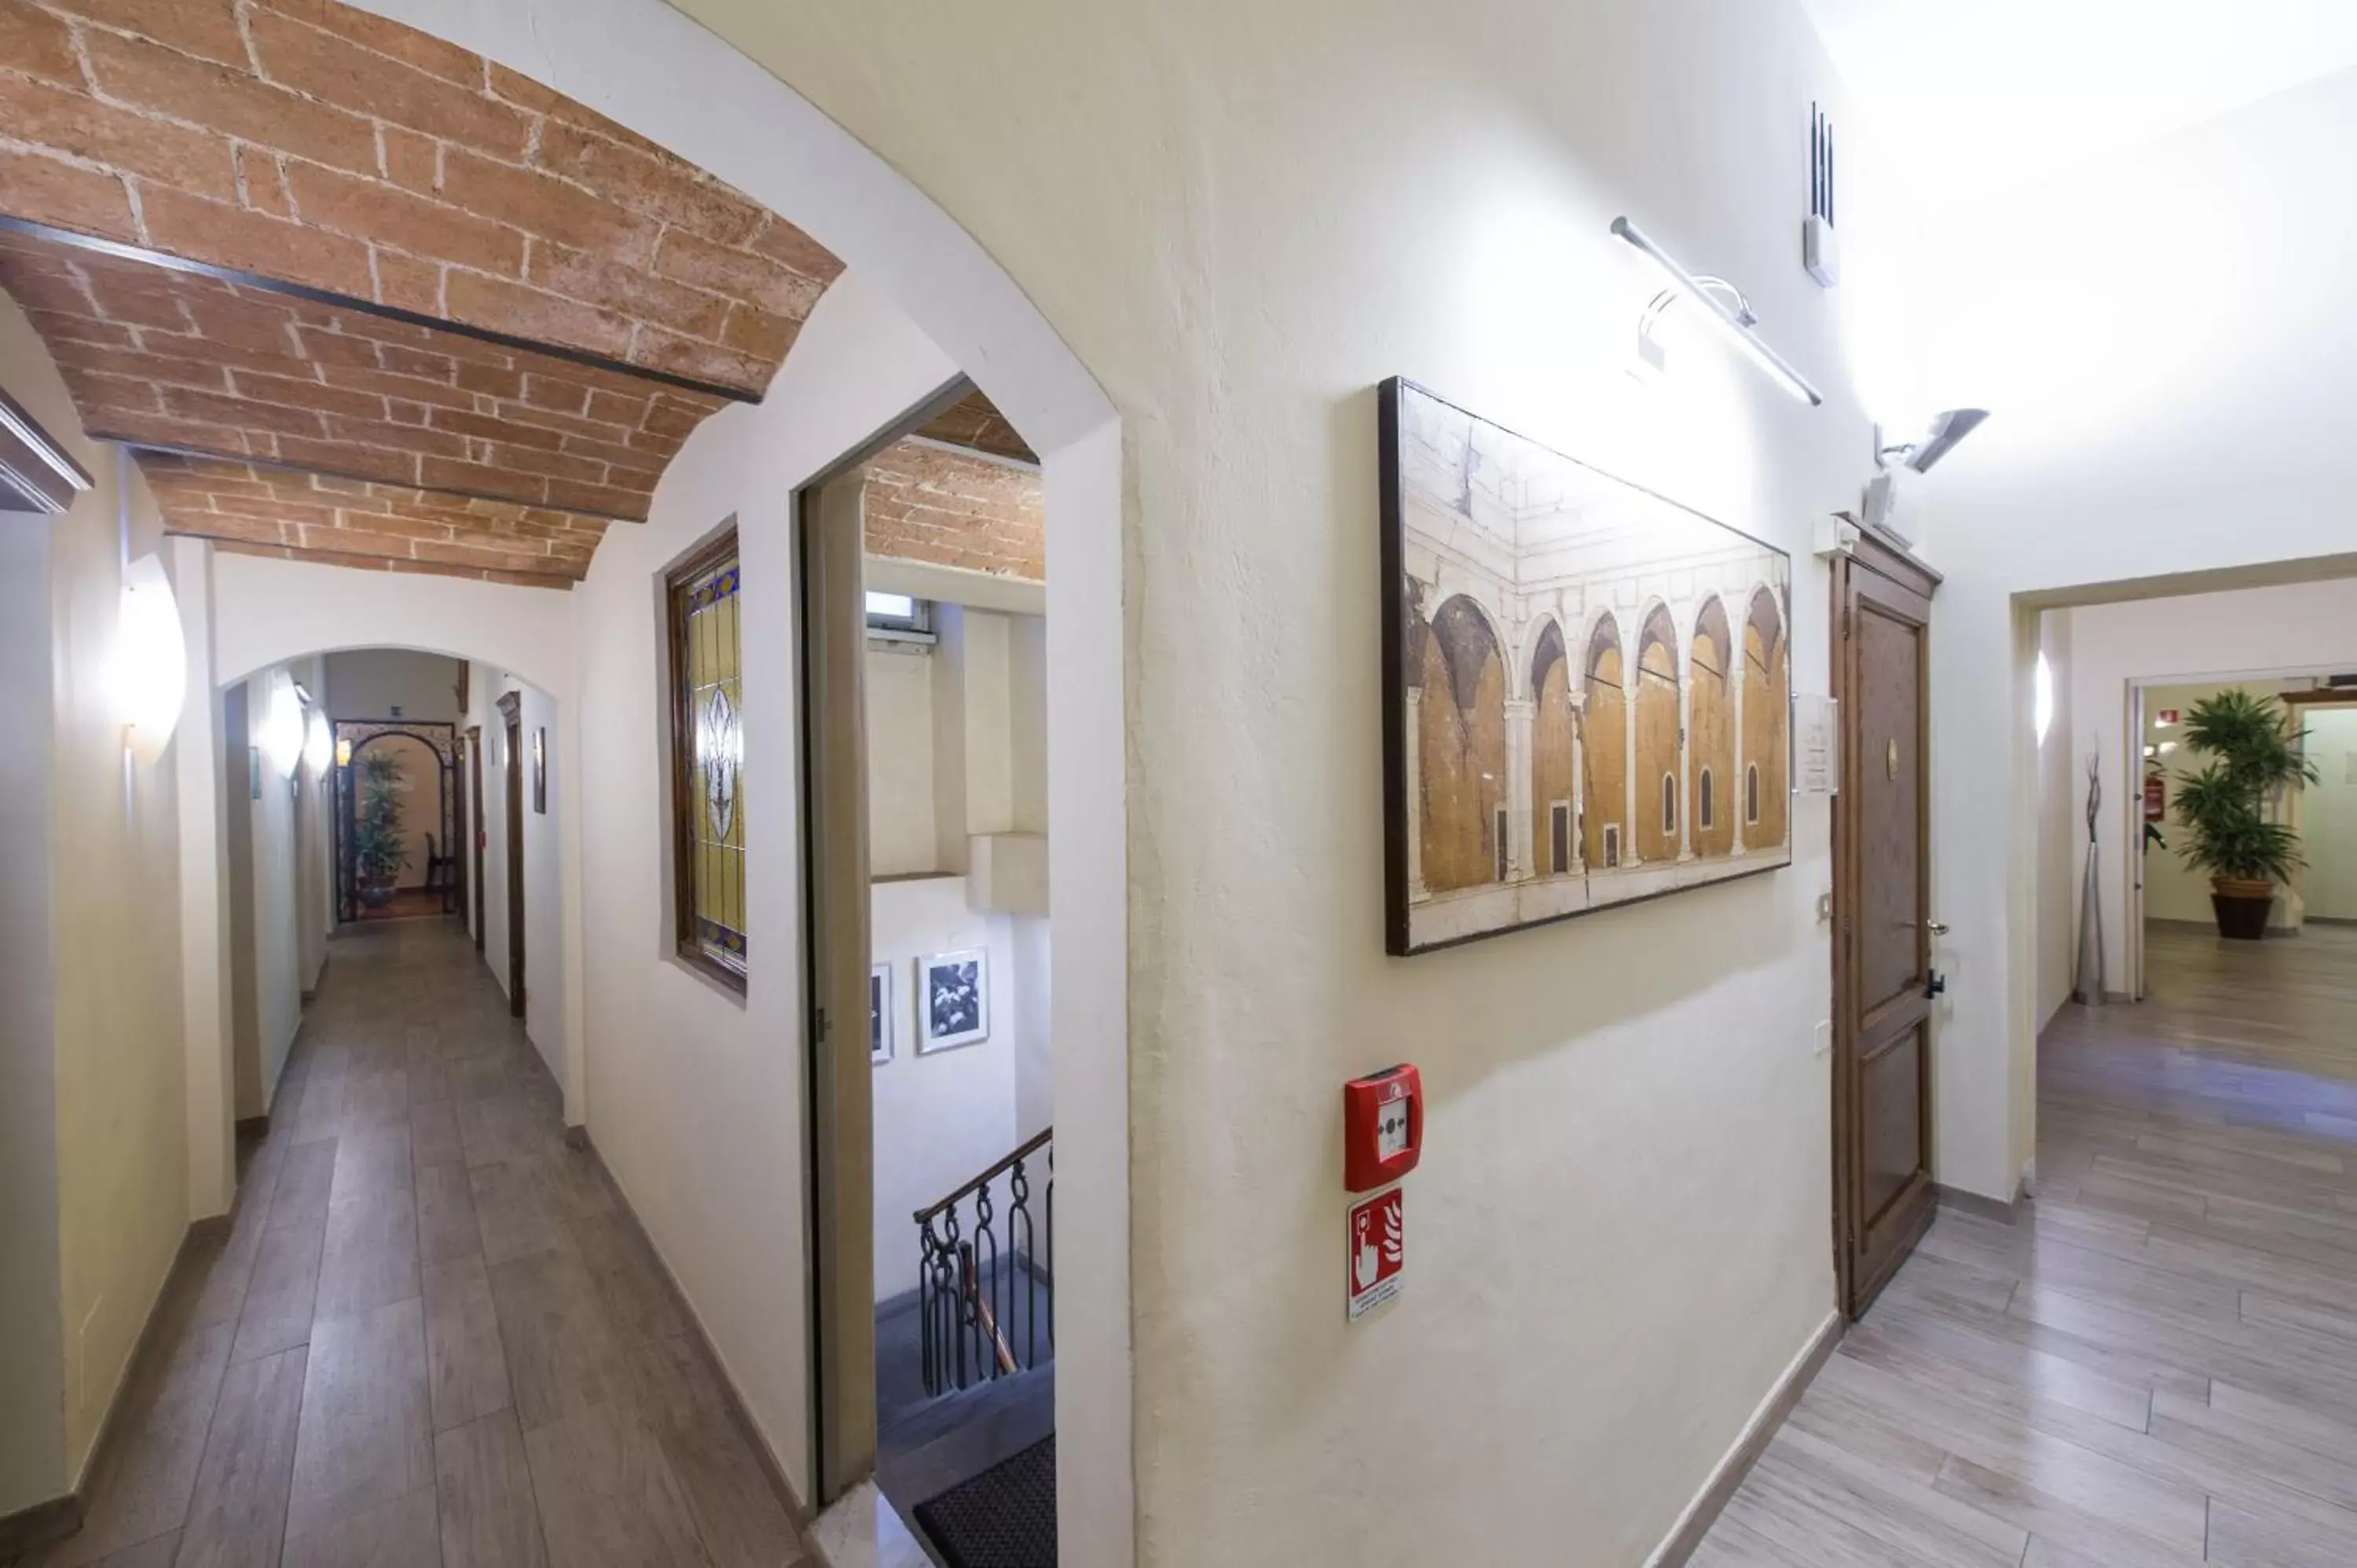 Area and facilities in Hotel Cosimo de' Medici